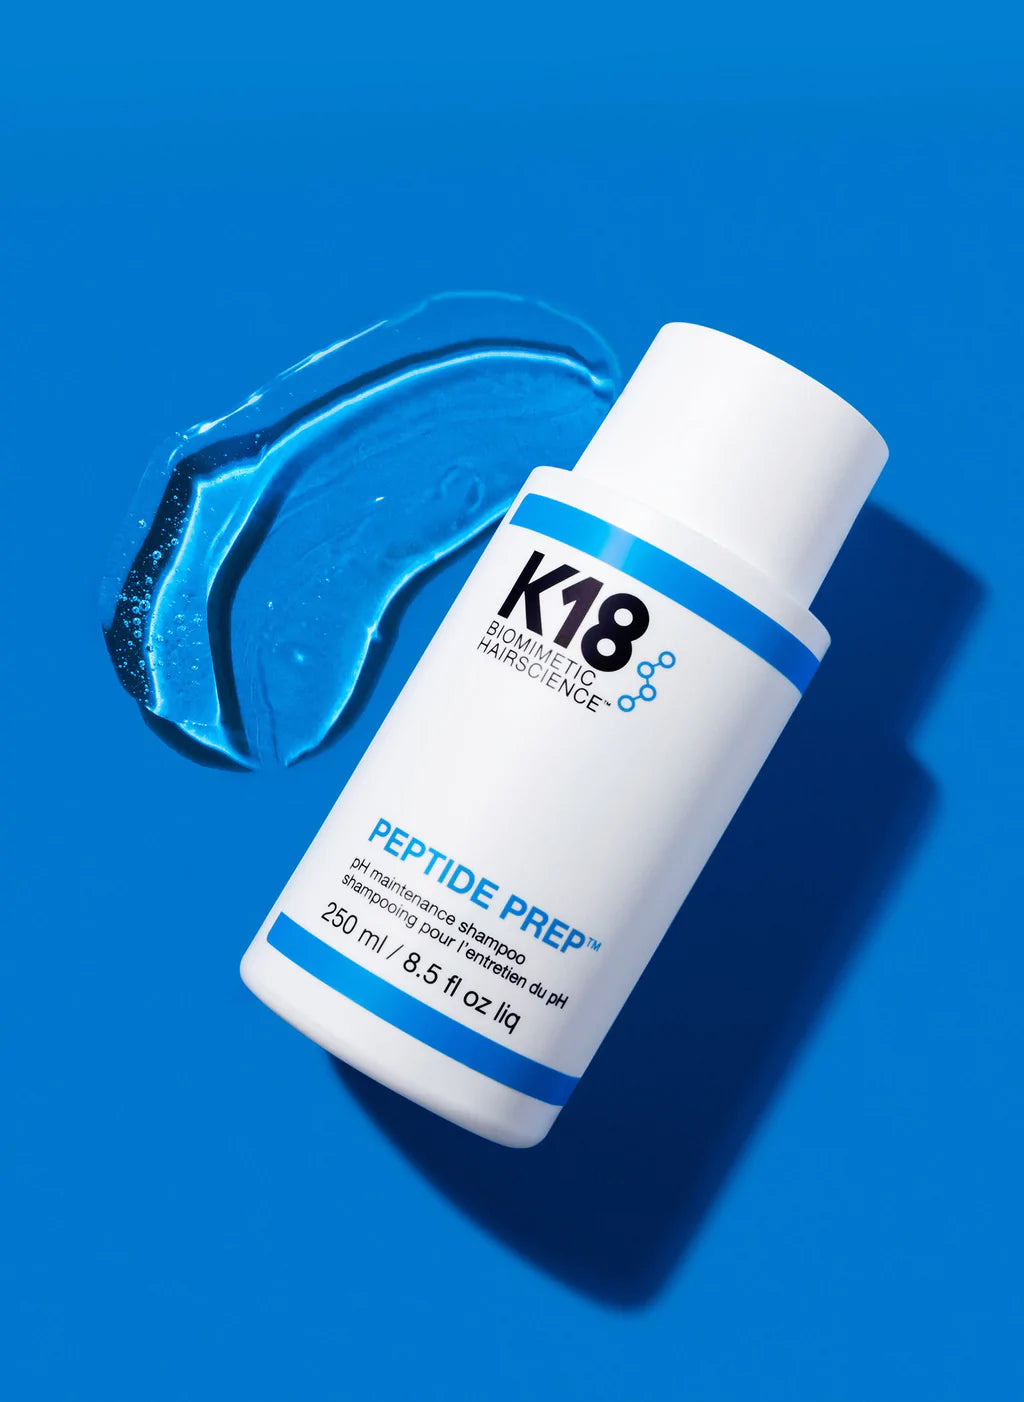 K18 PEPTIDE PREP™ pH maintenance shampoo 250ML